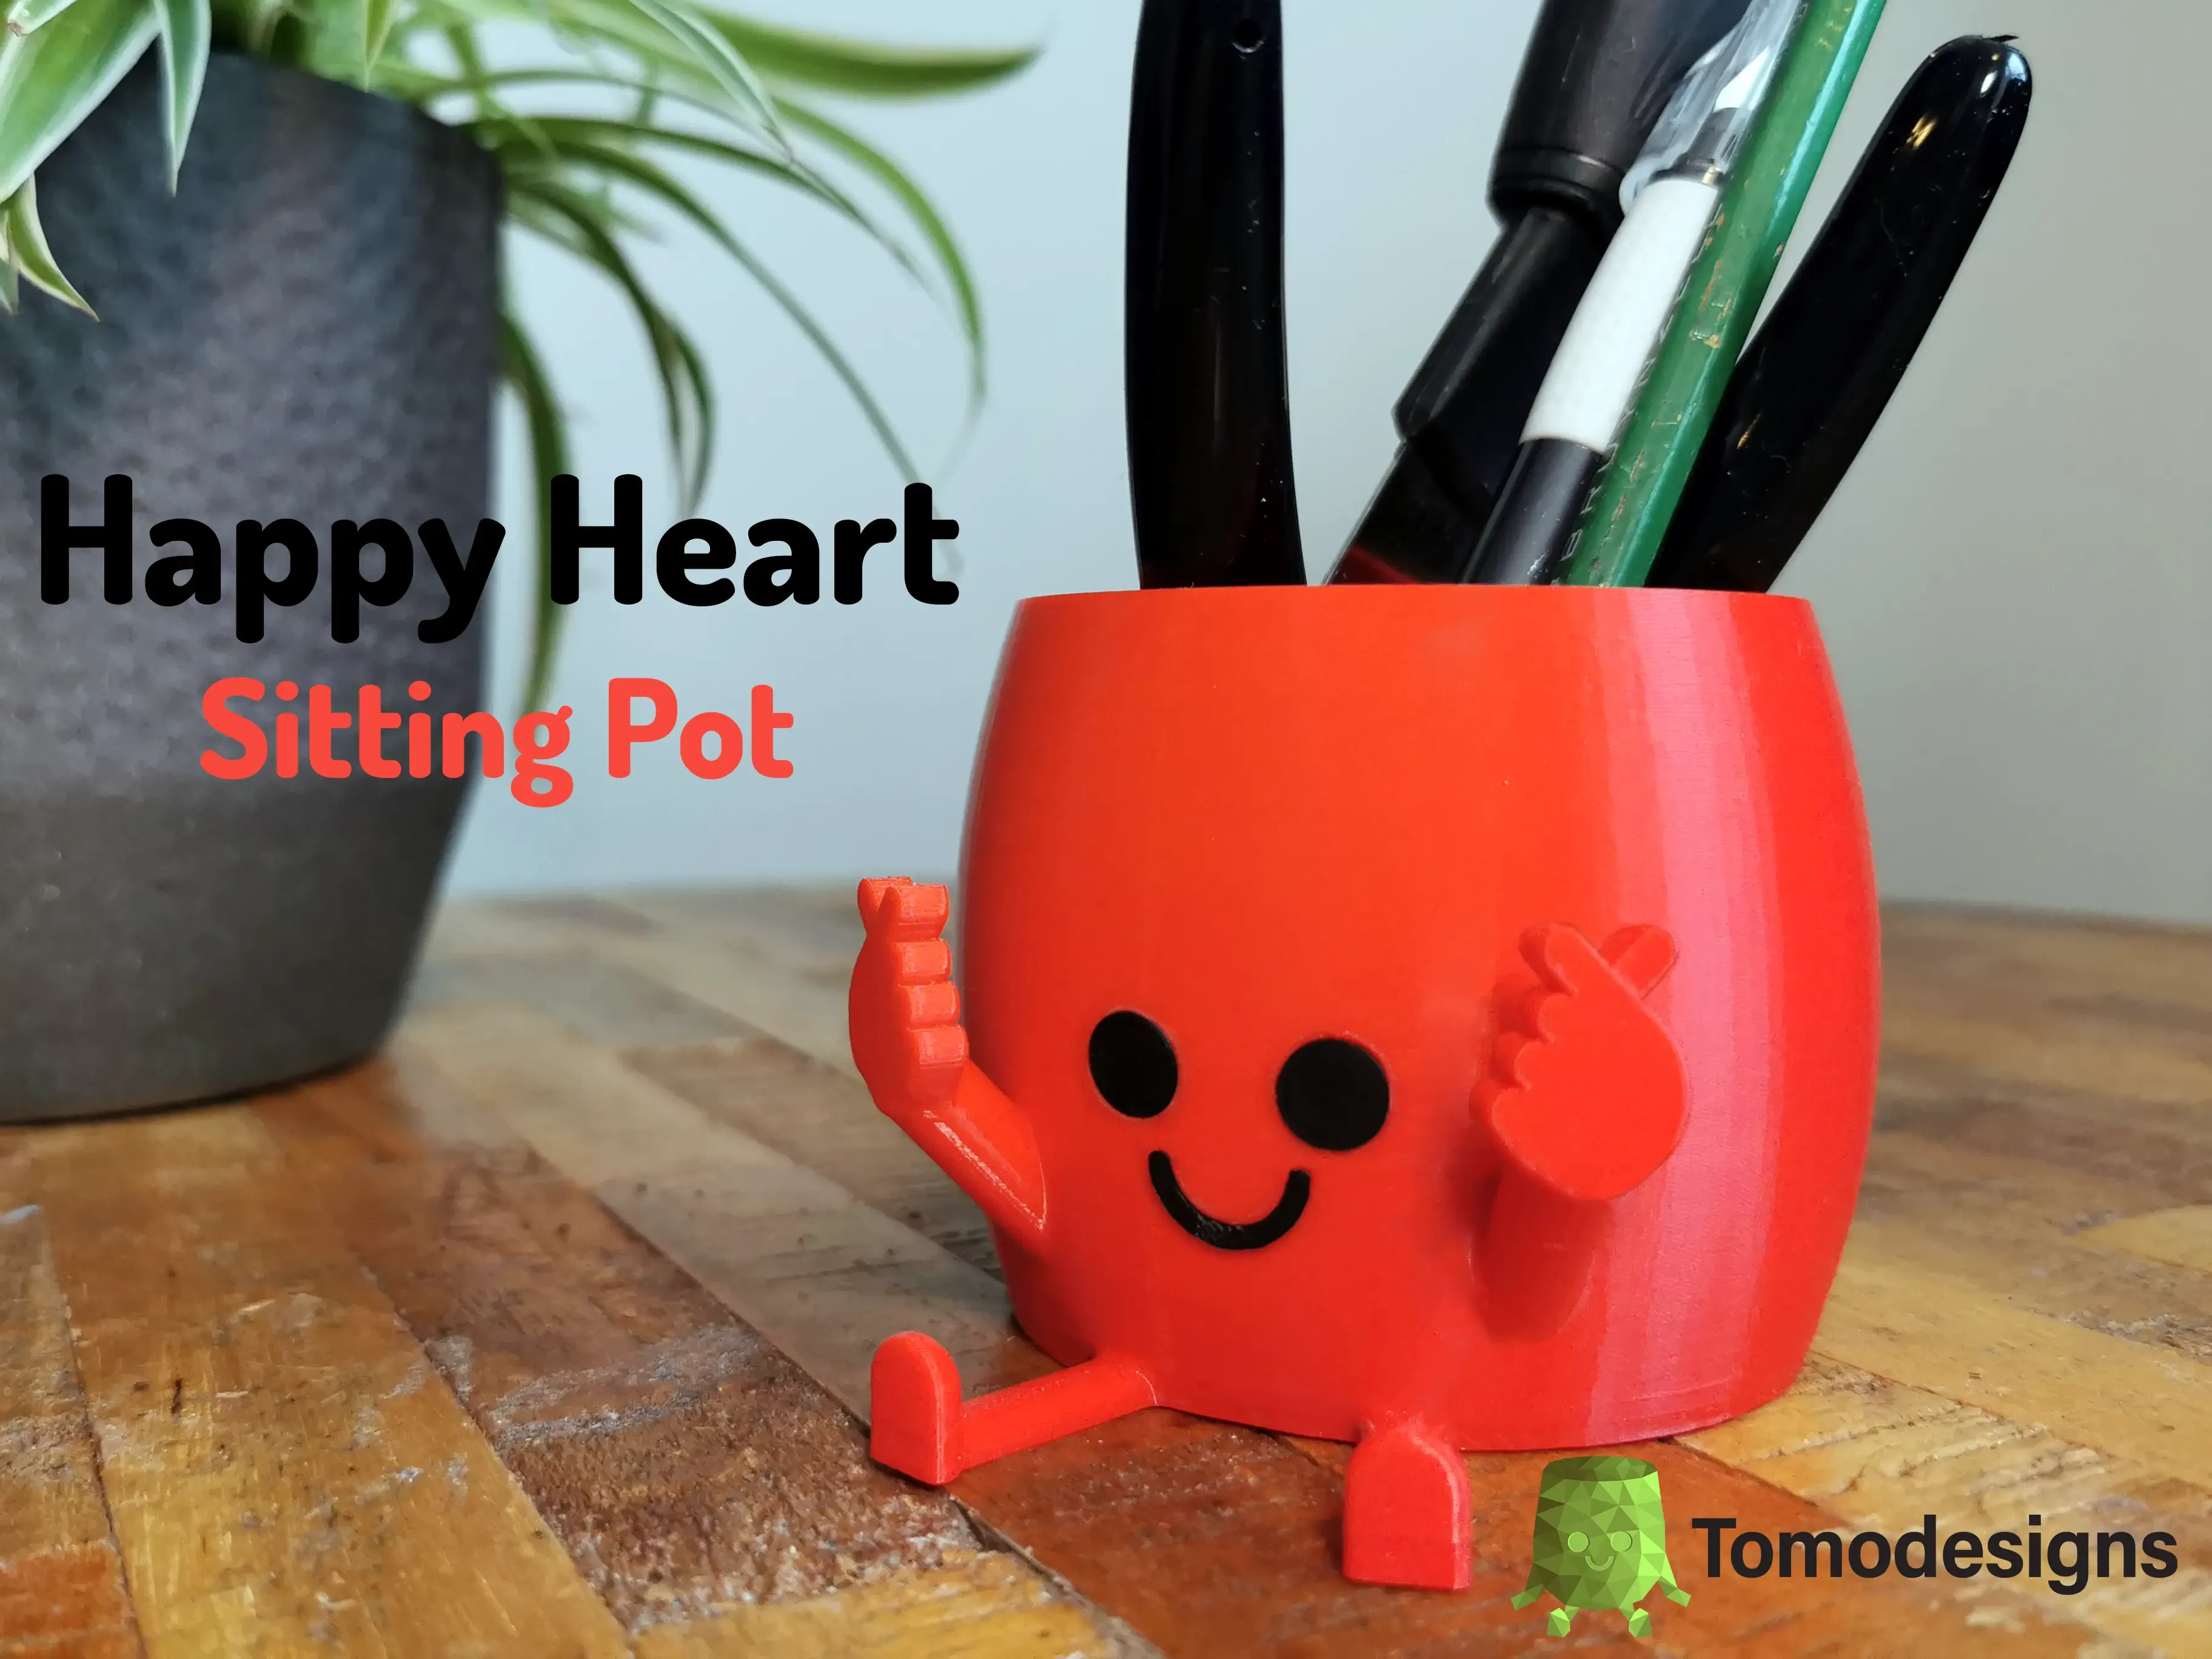 Happy Heart Sitting Pot